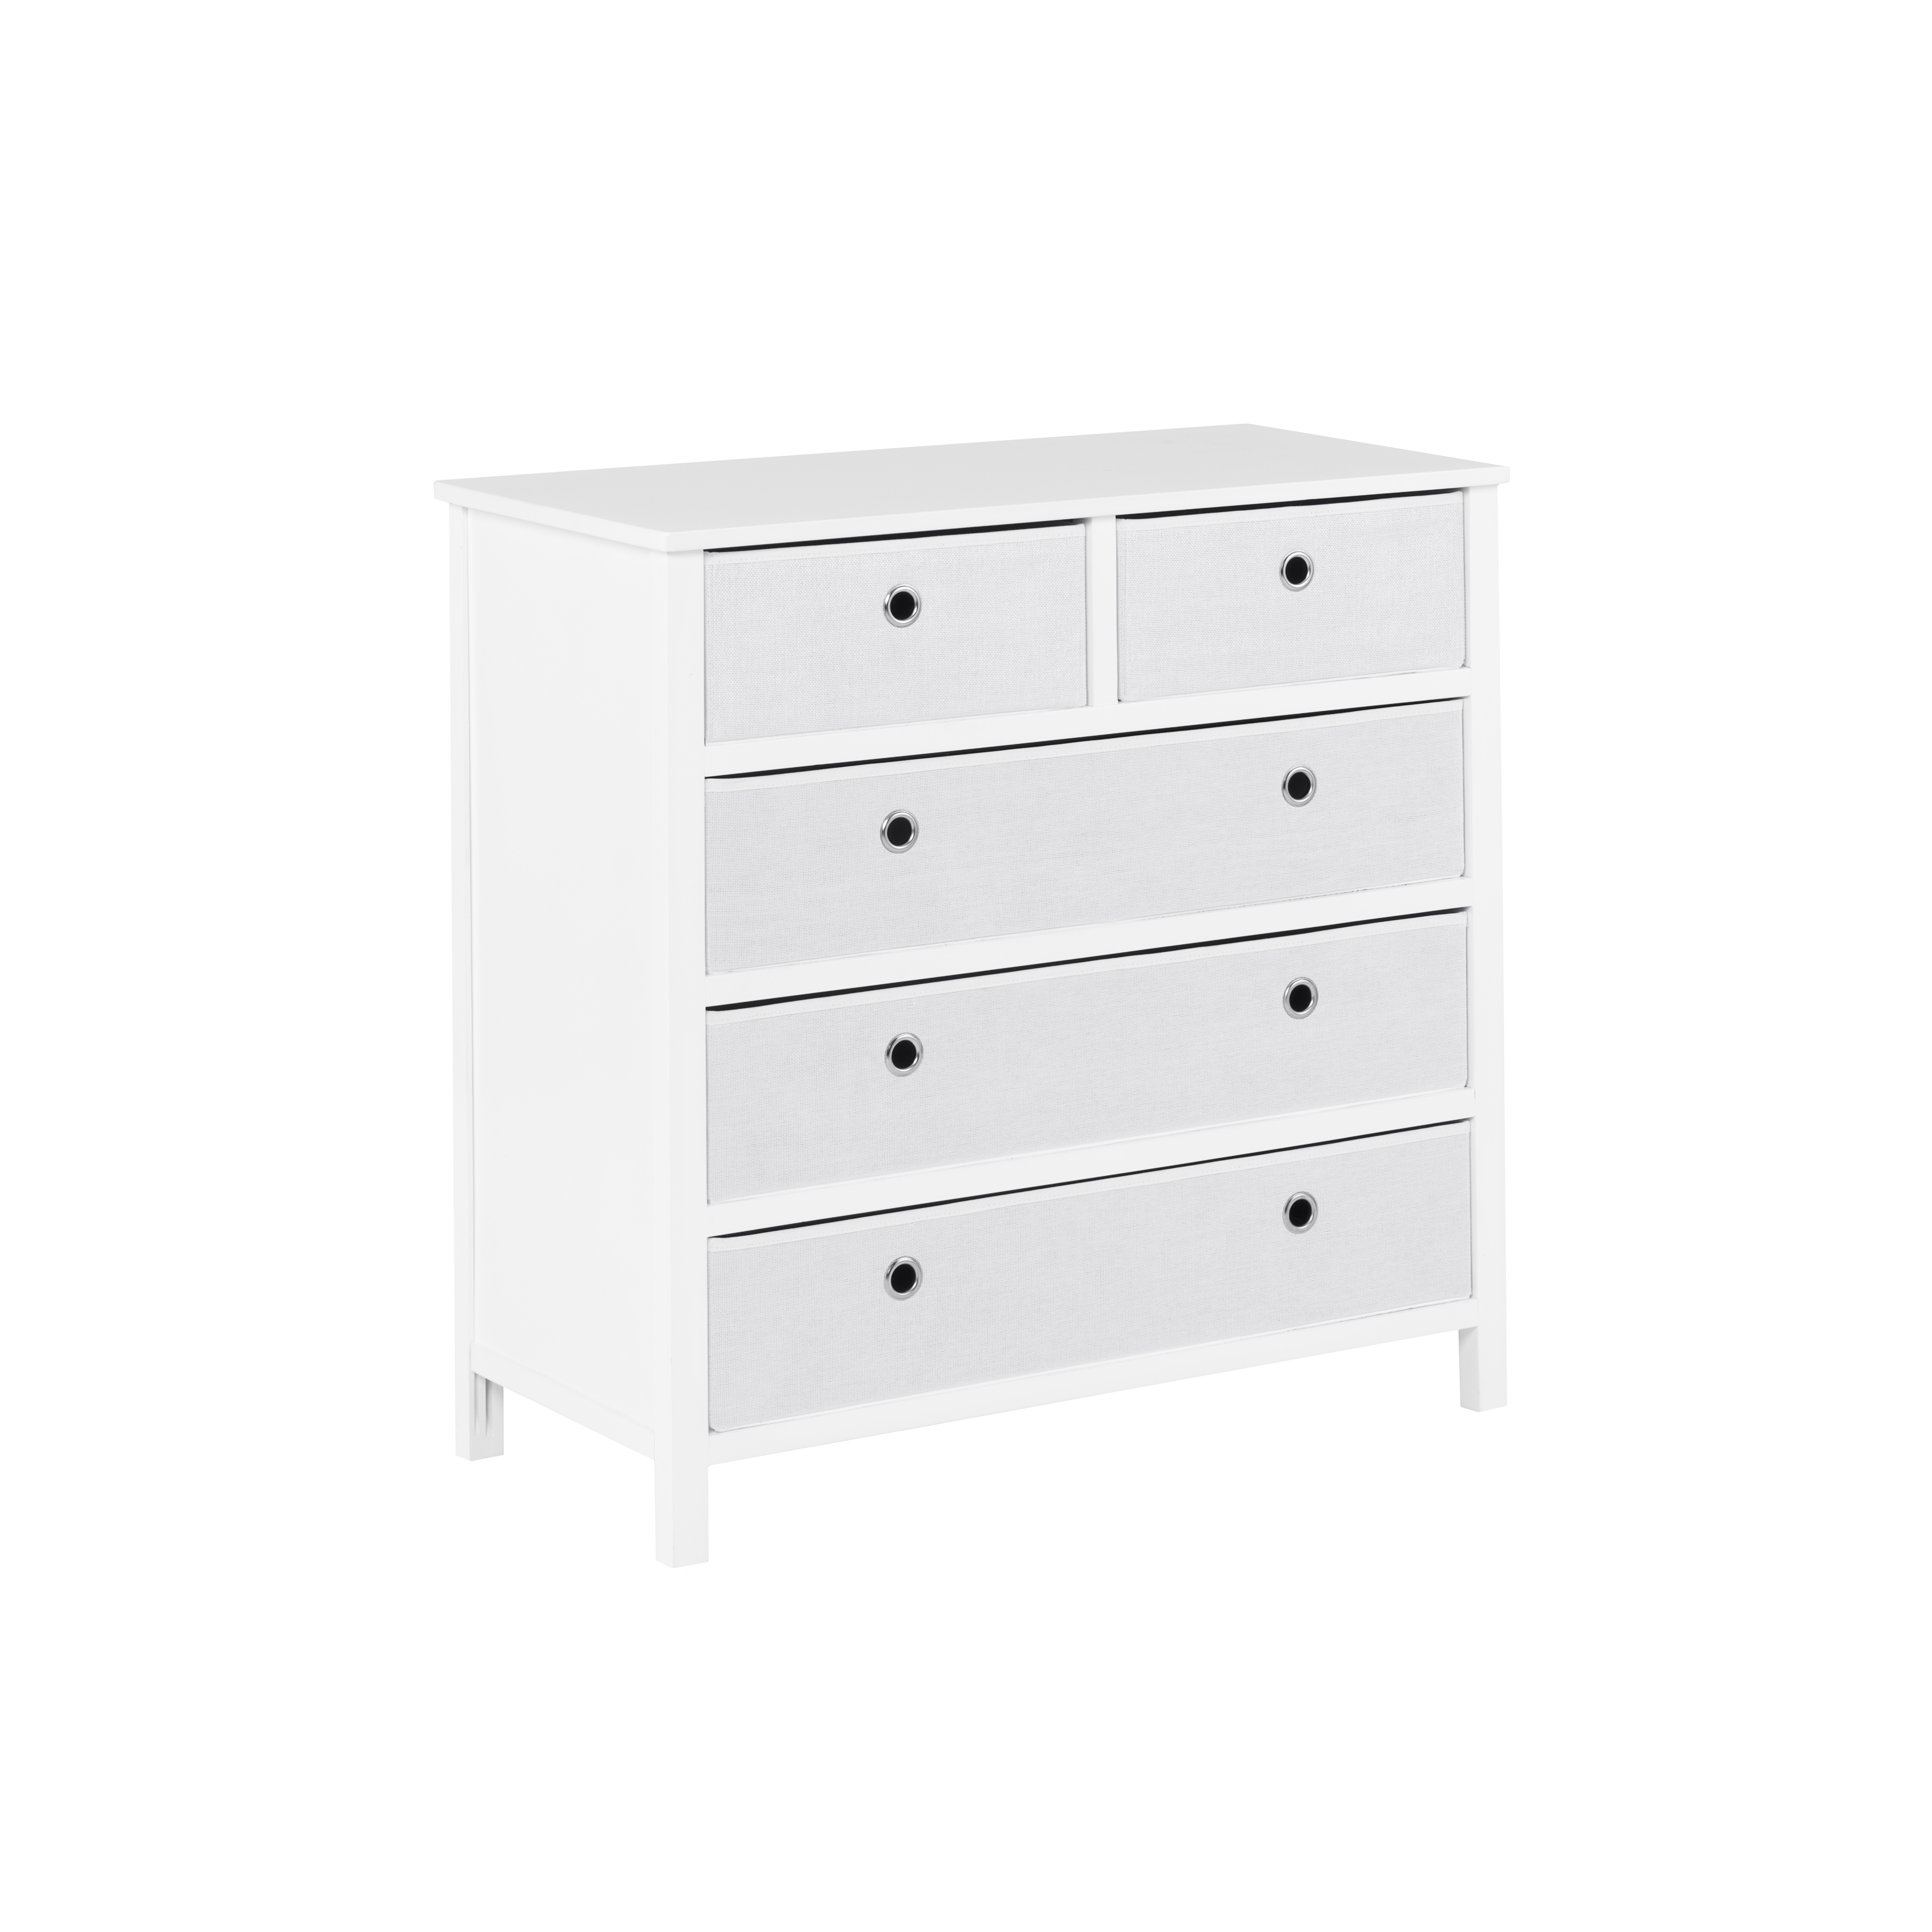 EZ Home Solutions Foldable Furniture Split Drawer Single Dresser 31 x 31 x 19 - White - image 4 of 7